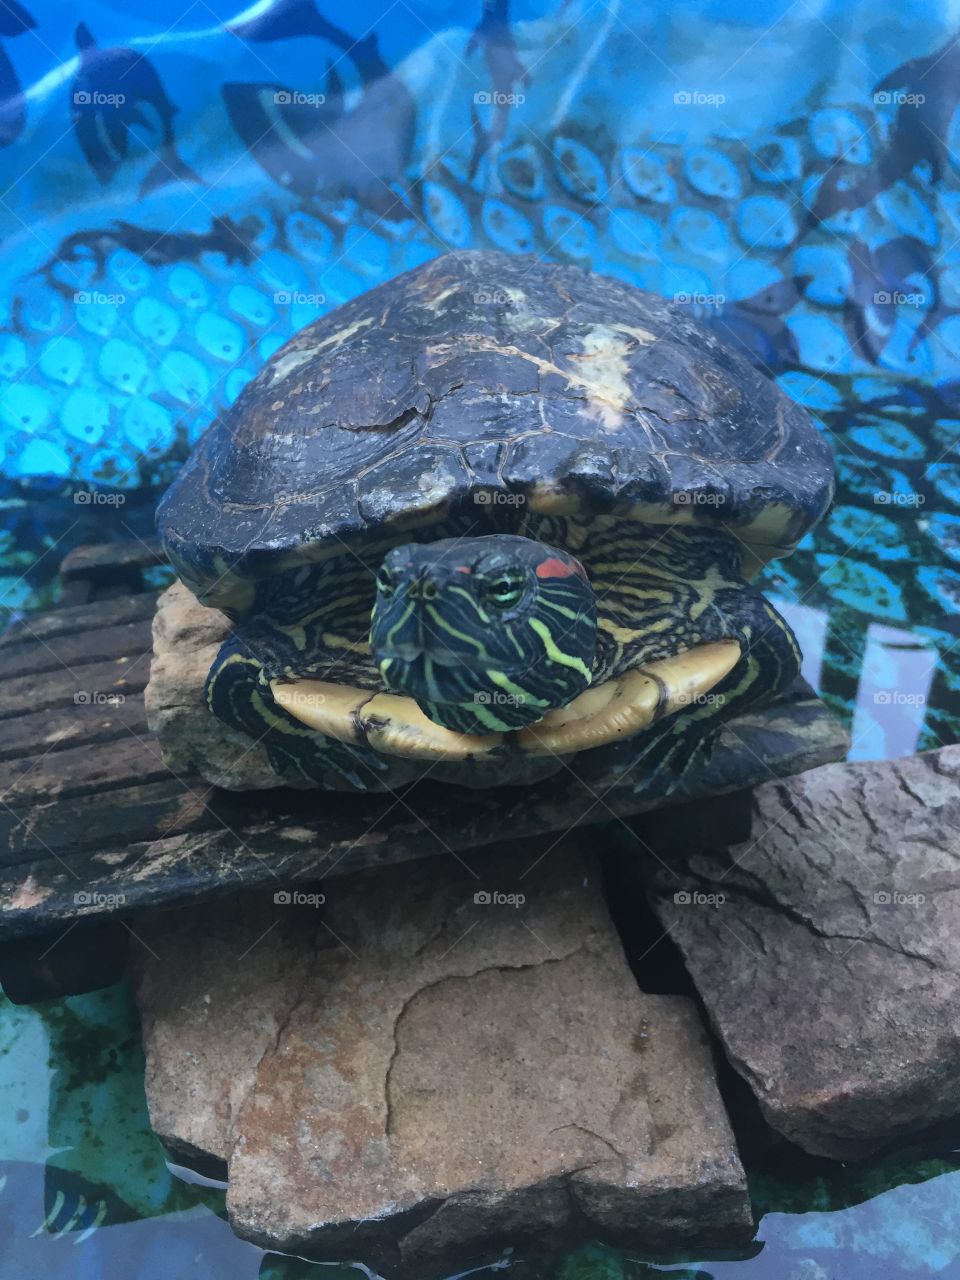 Turtle in pool